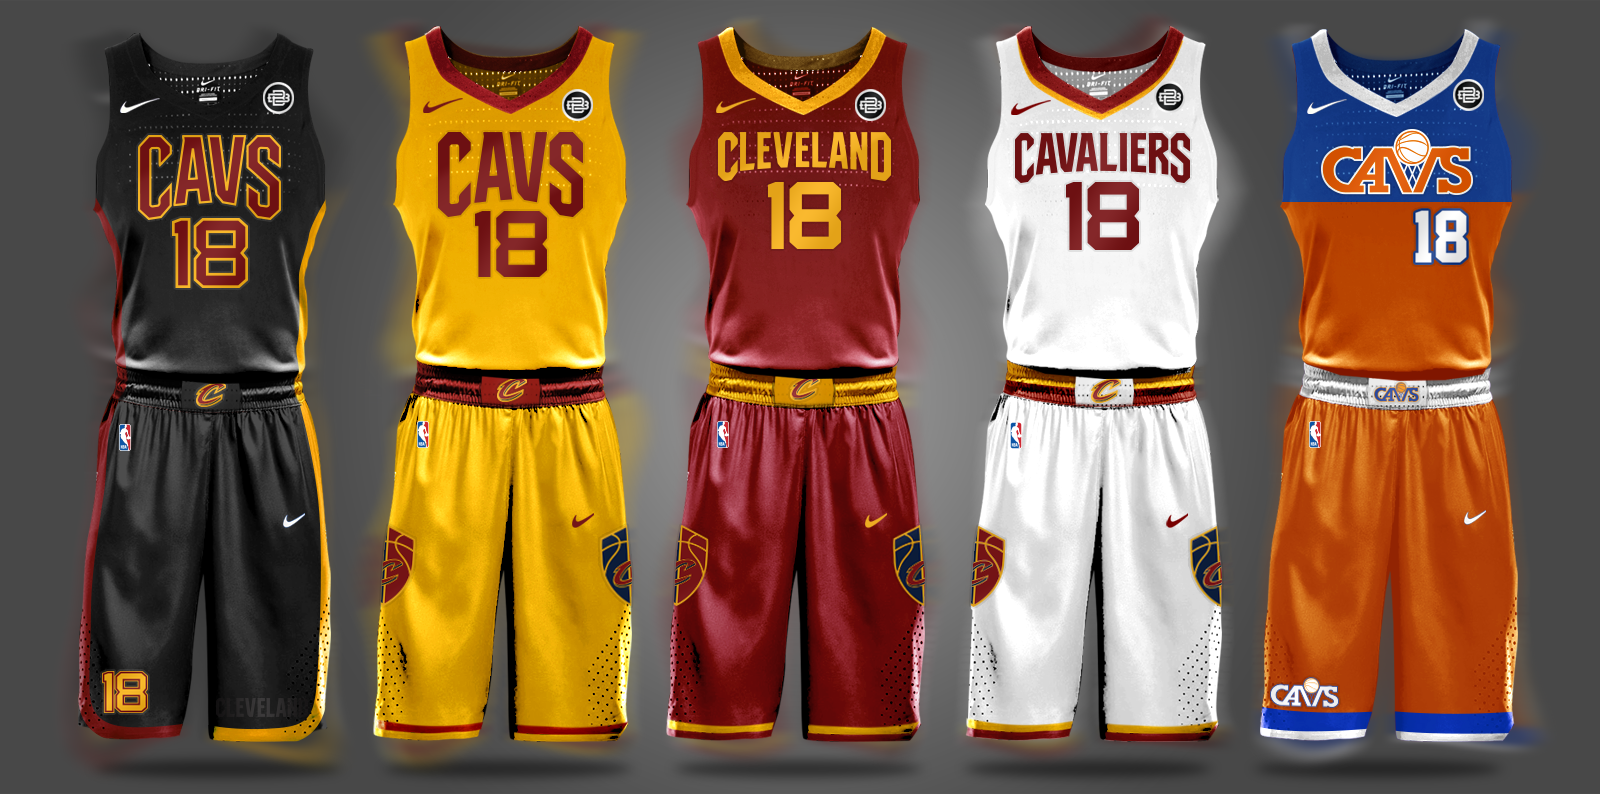 Graphic Designer's NBA Uniform Concepts Rival Nike's Real Jerseys